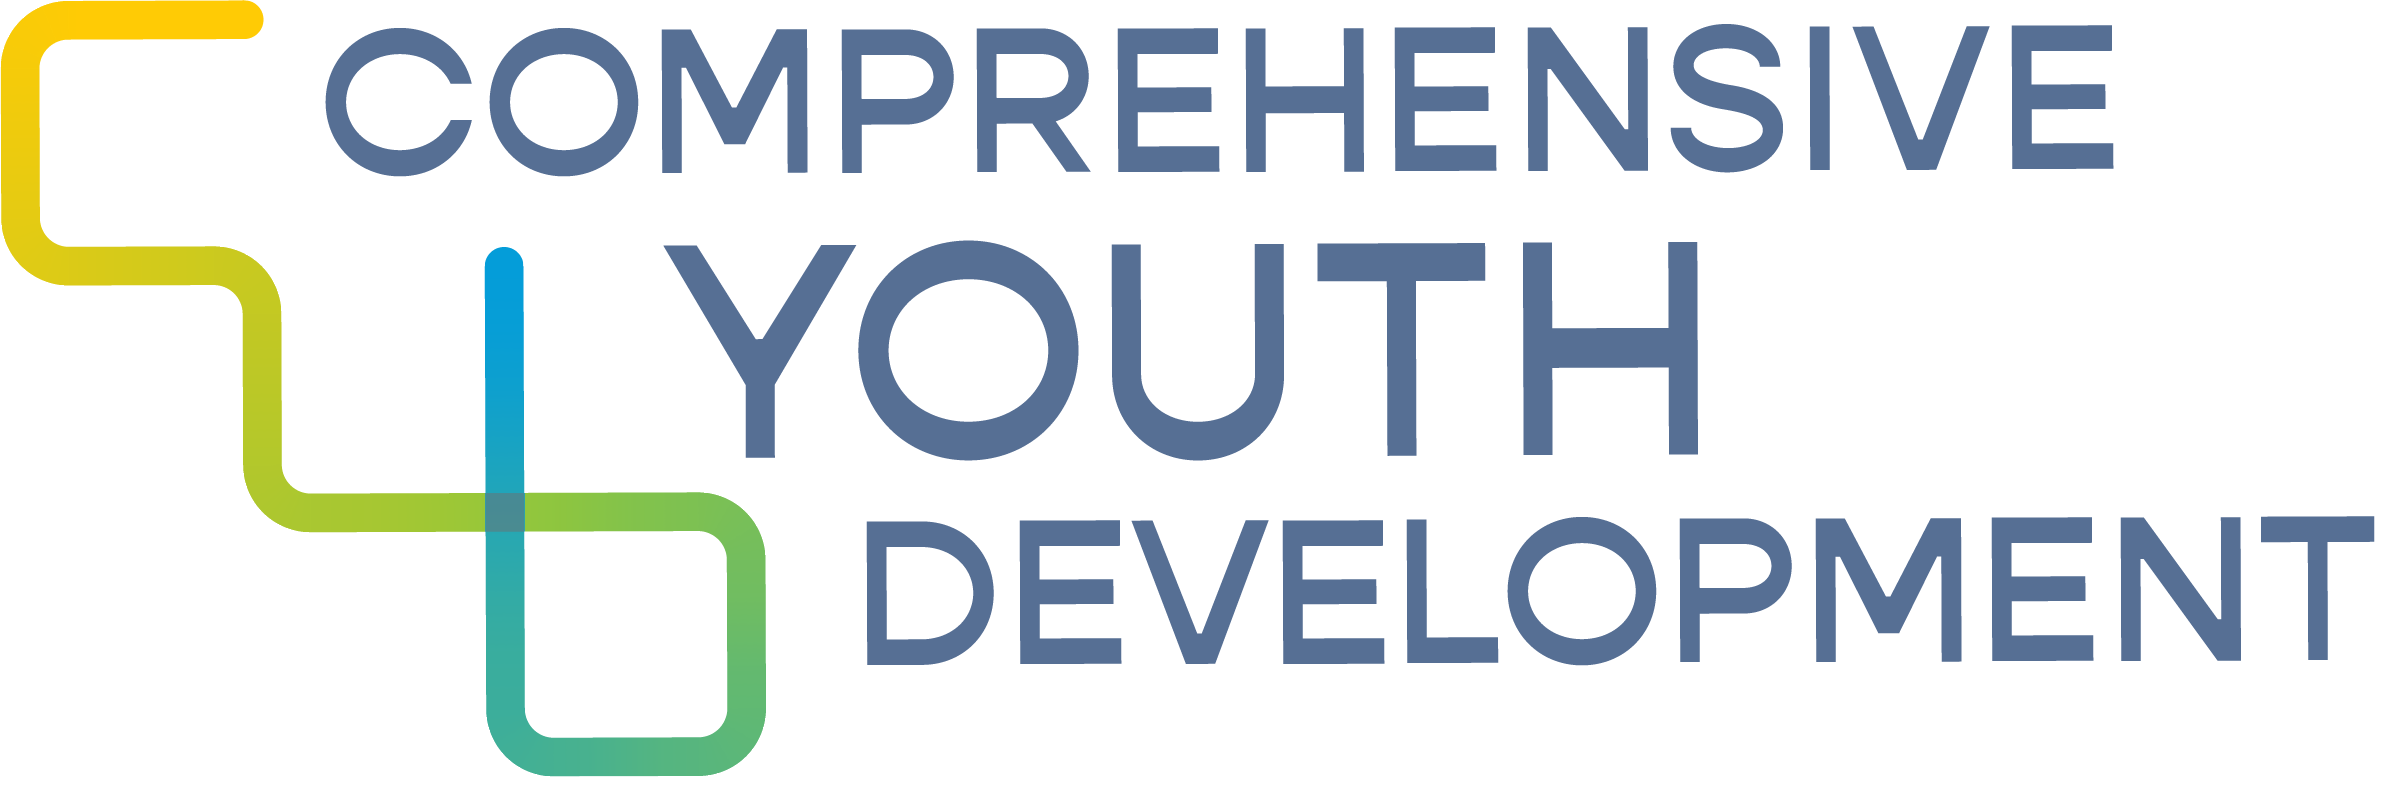 Comprehensive Youth Development